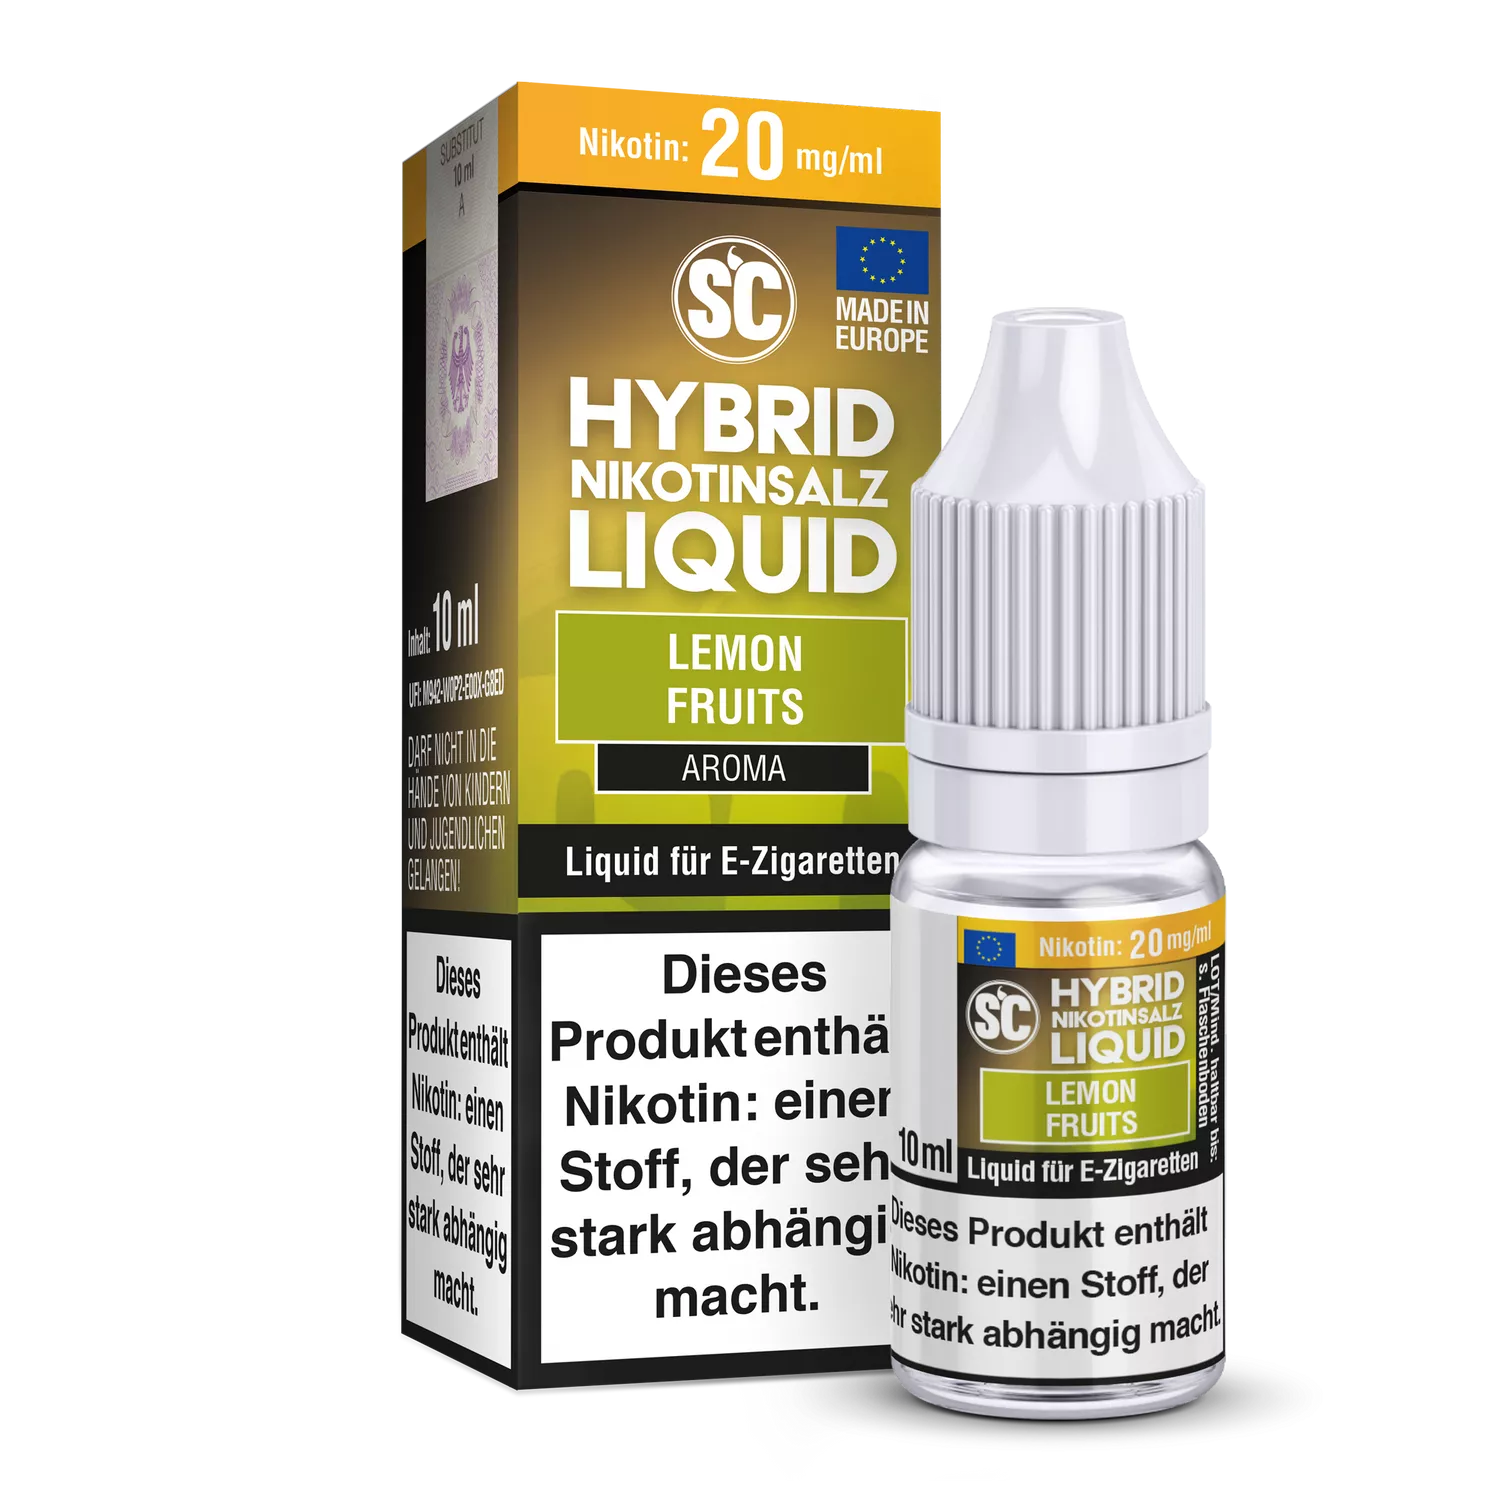 SC Hybrid Nikotinsalz Liquid Lemon Fruits - 20mg/ml